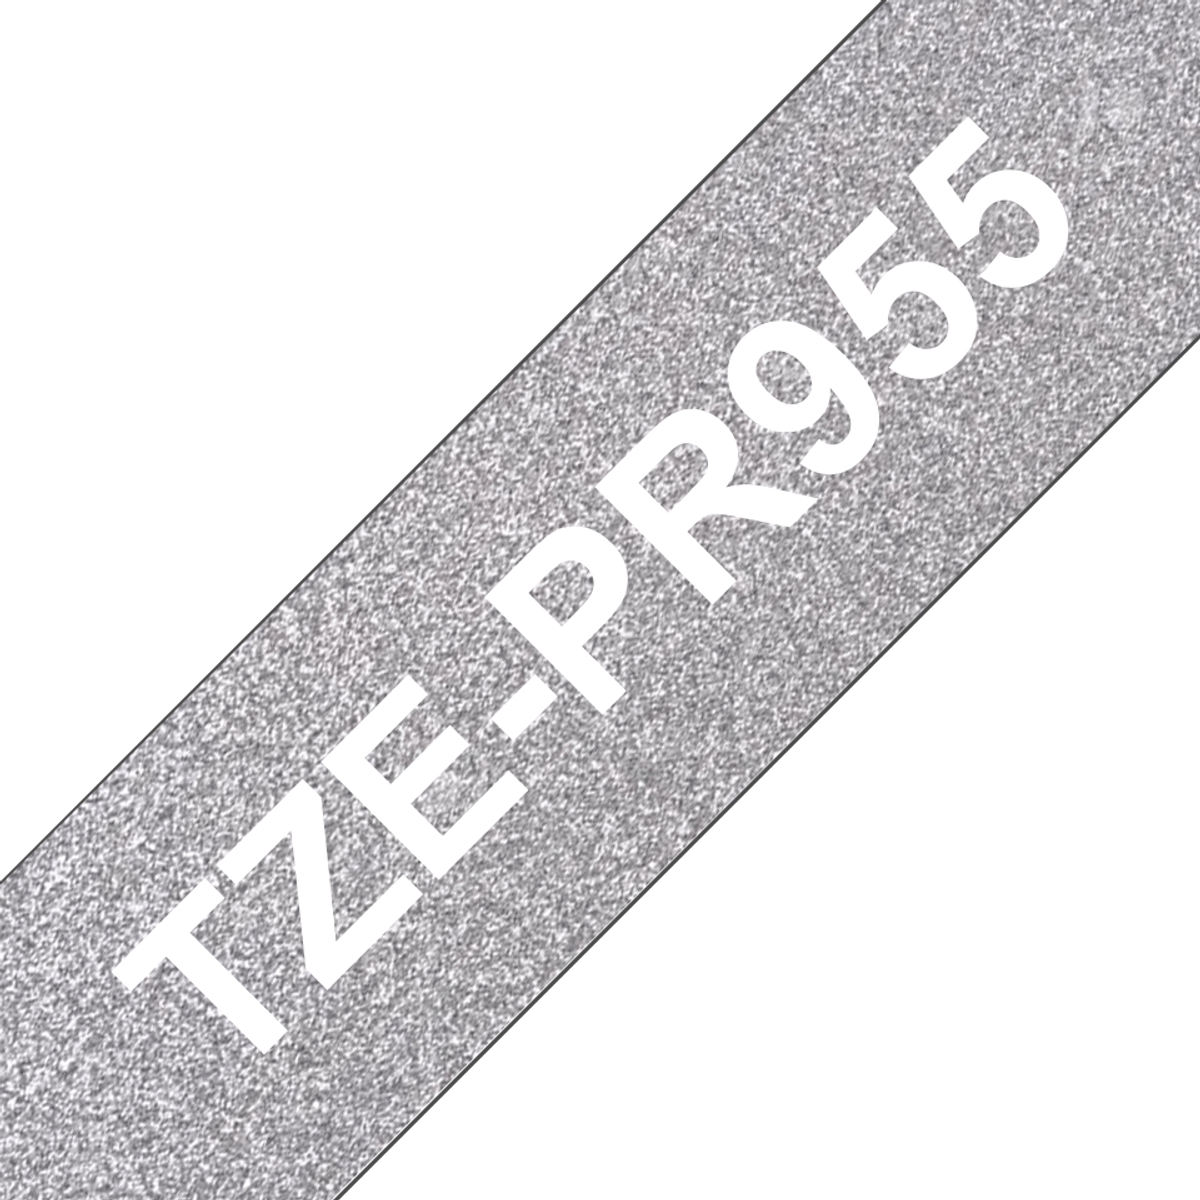 TZEPR955 24mm Black On Silver Label Tape